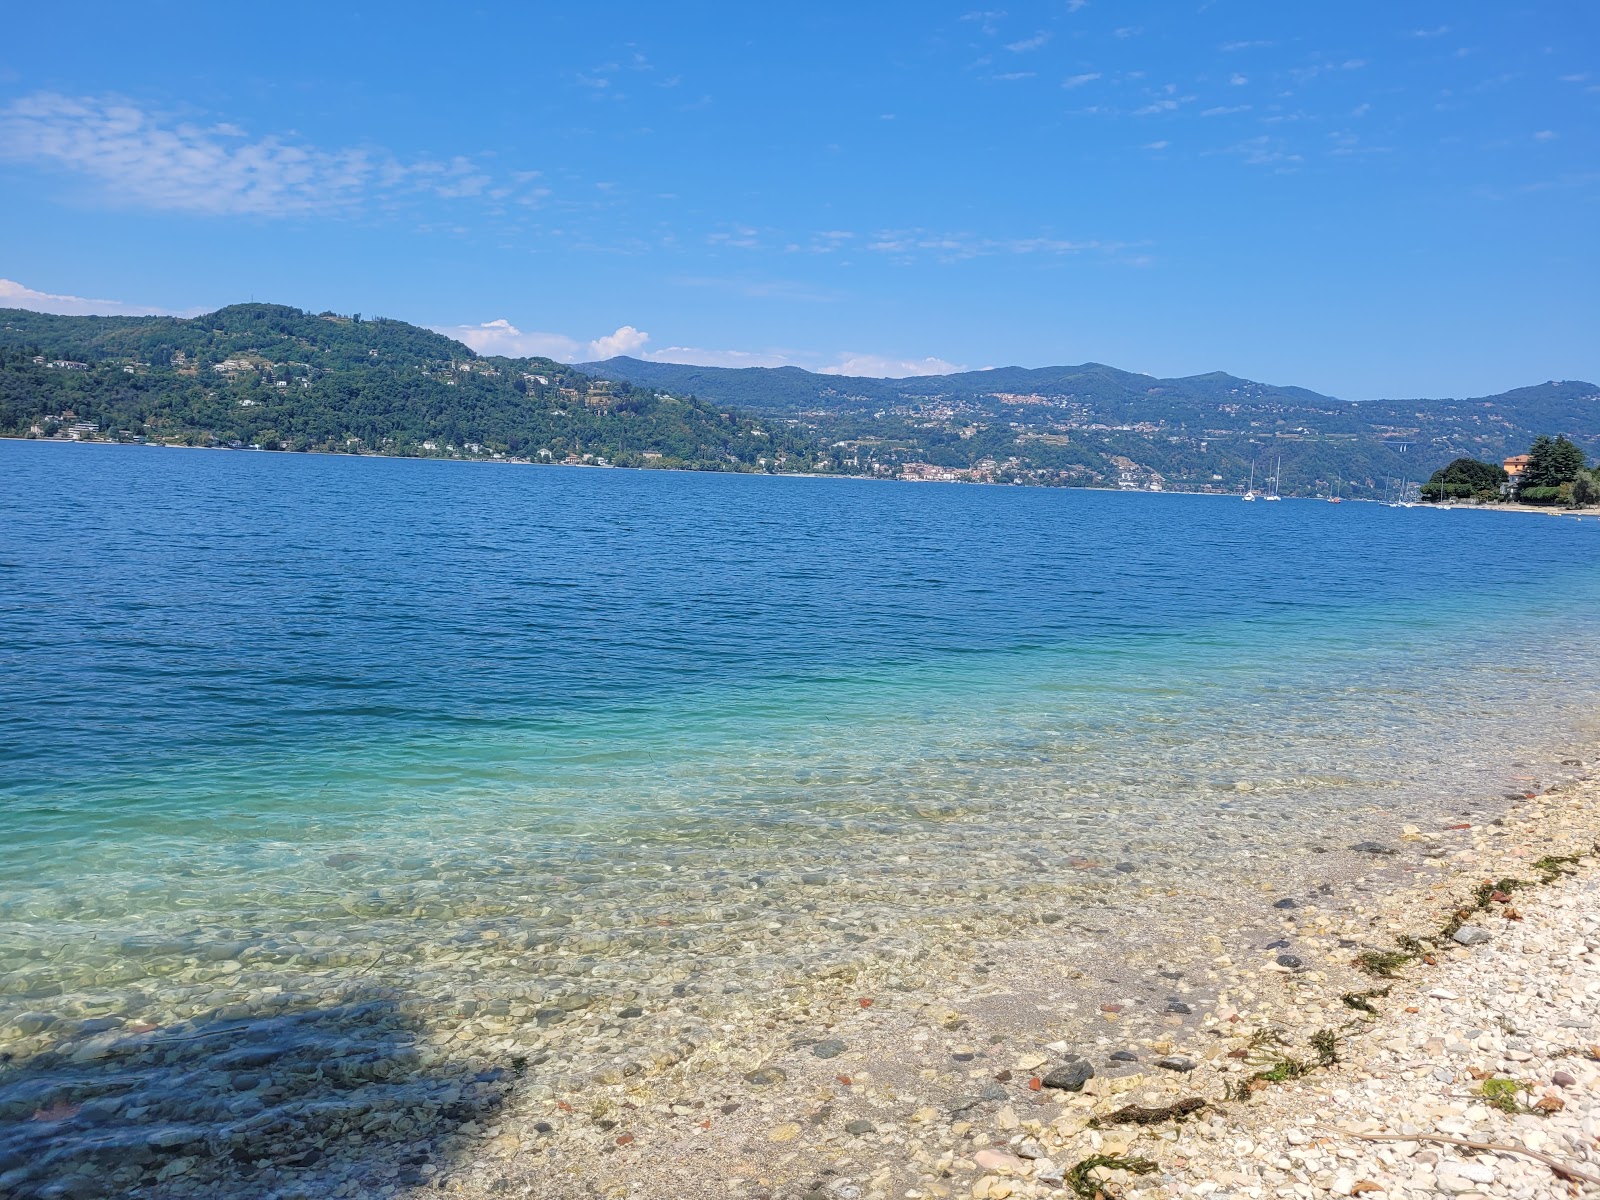 Fotografija Spiaggia libera di Angera z turkizna čista voda površino